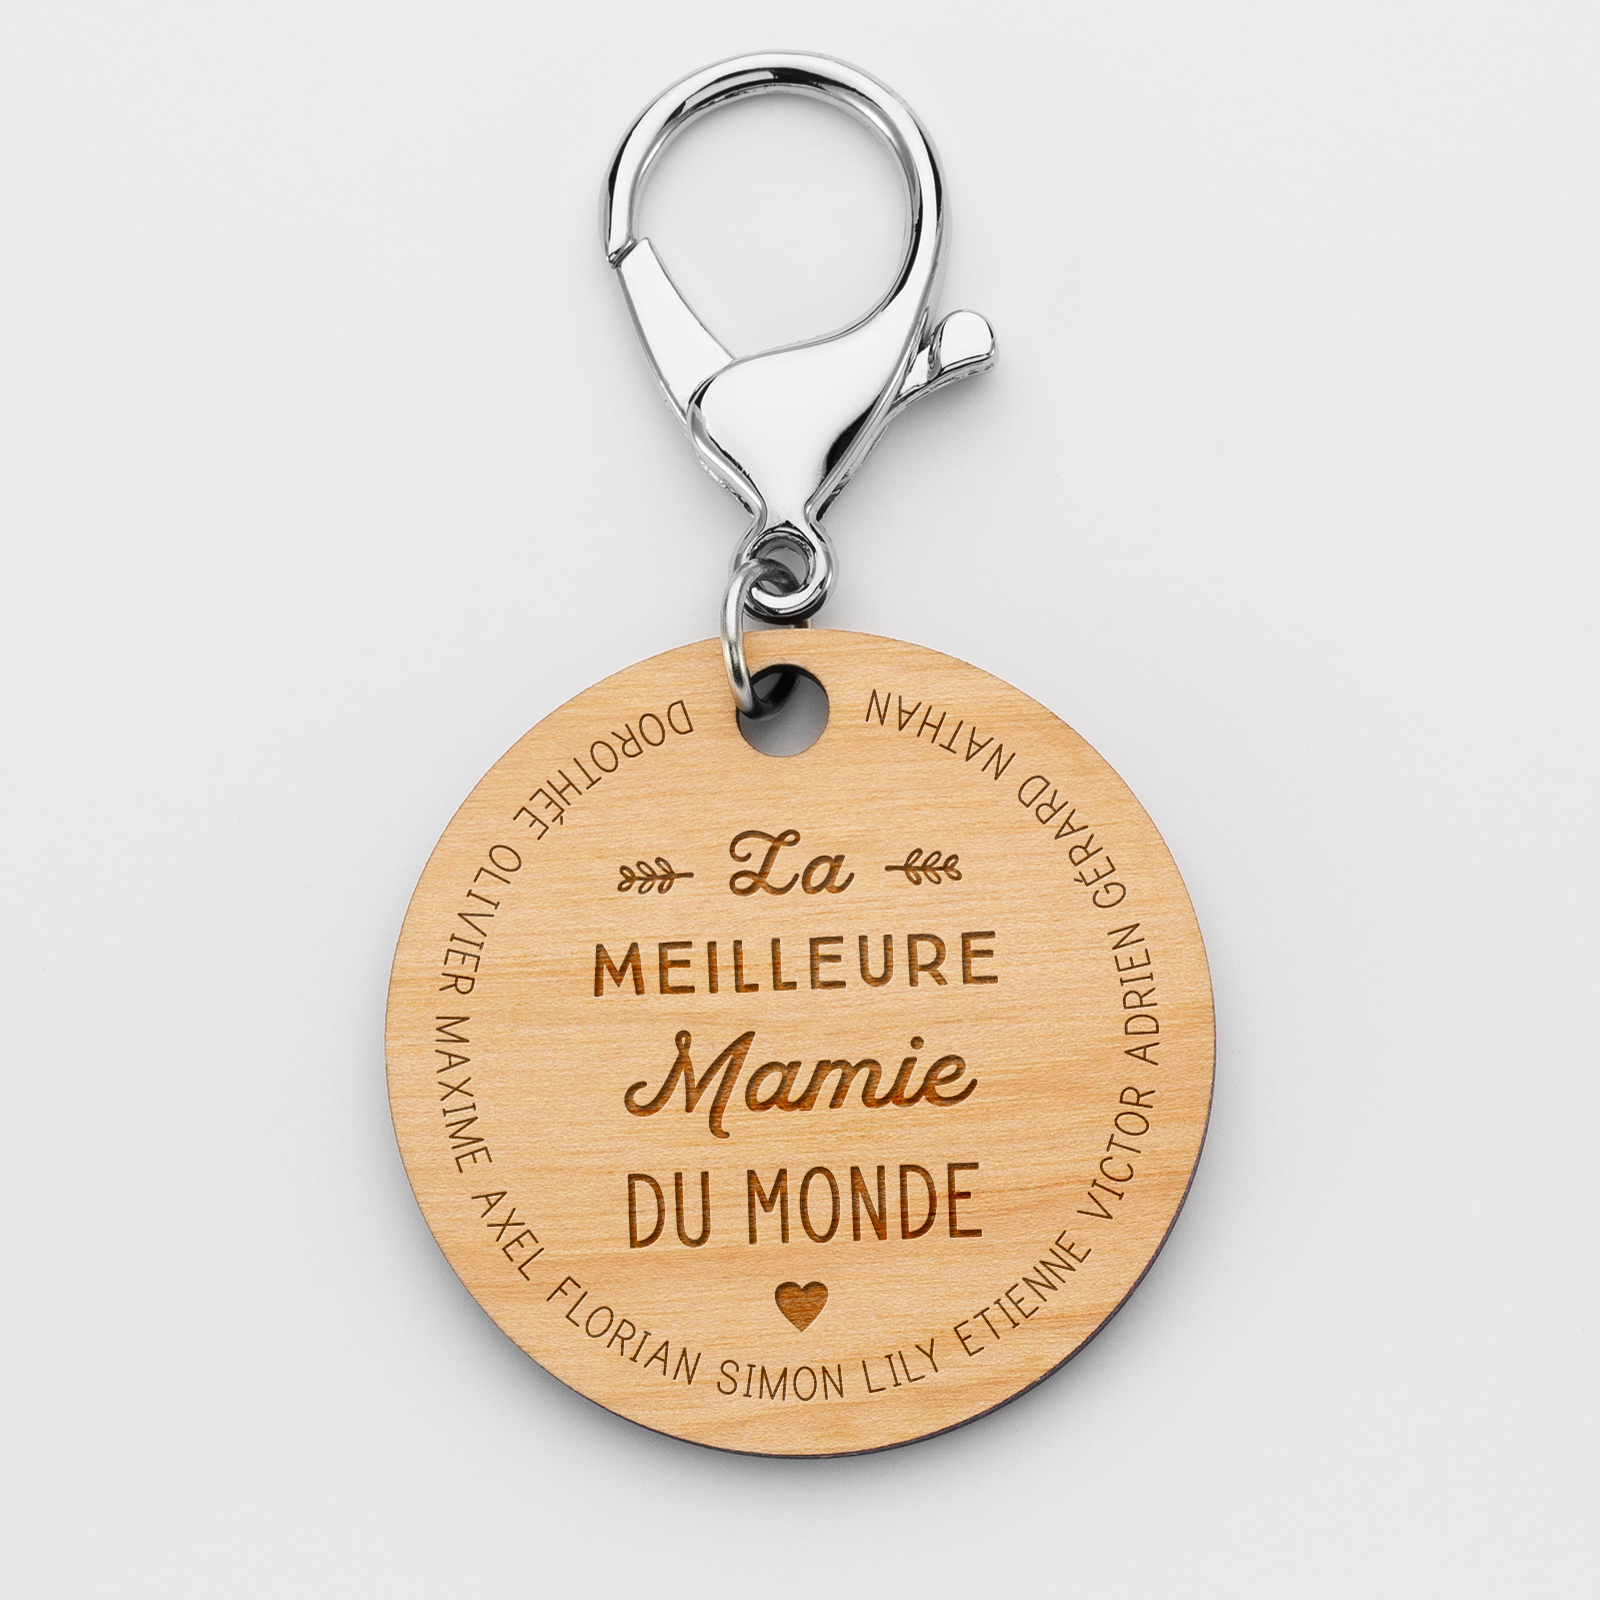 Personalised engraved wooden "World's best Grandma" round names medallion keyring 50mm - 2